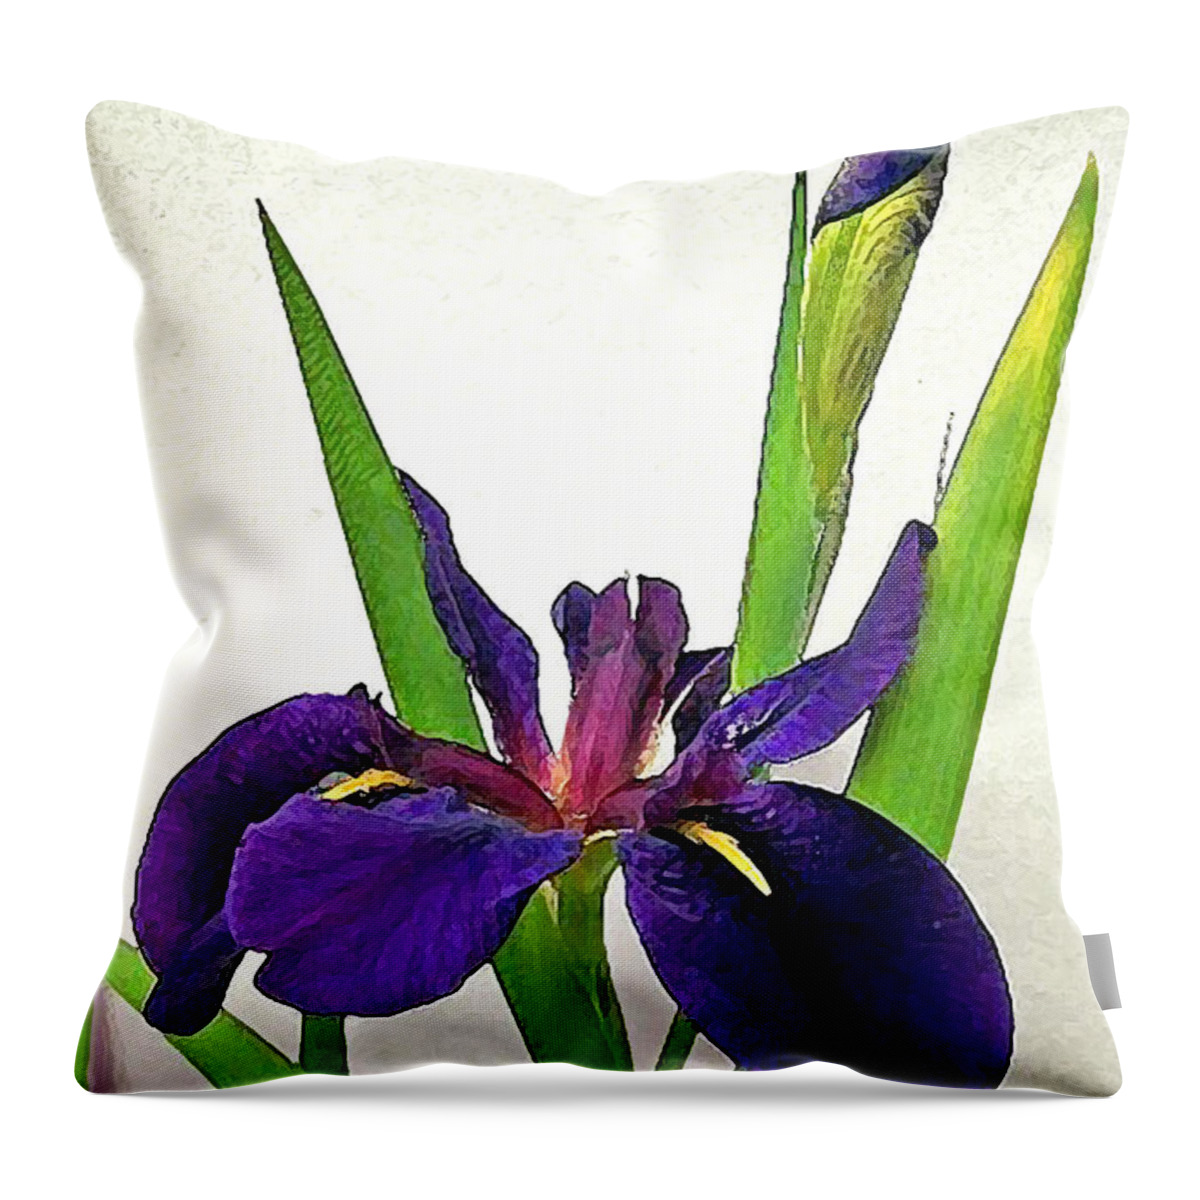 Flower Throw Pillow featuring the digital art Louisiana Iris by Deborah Smith